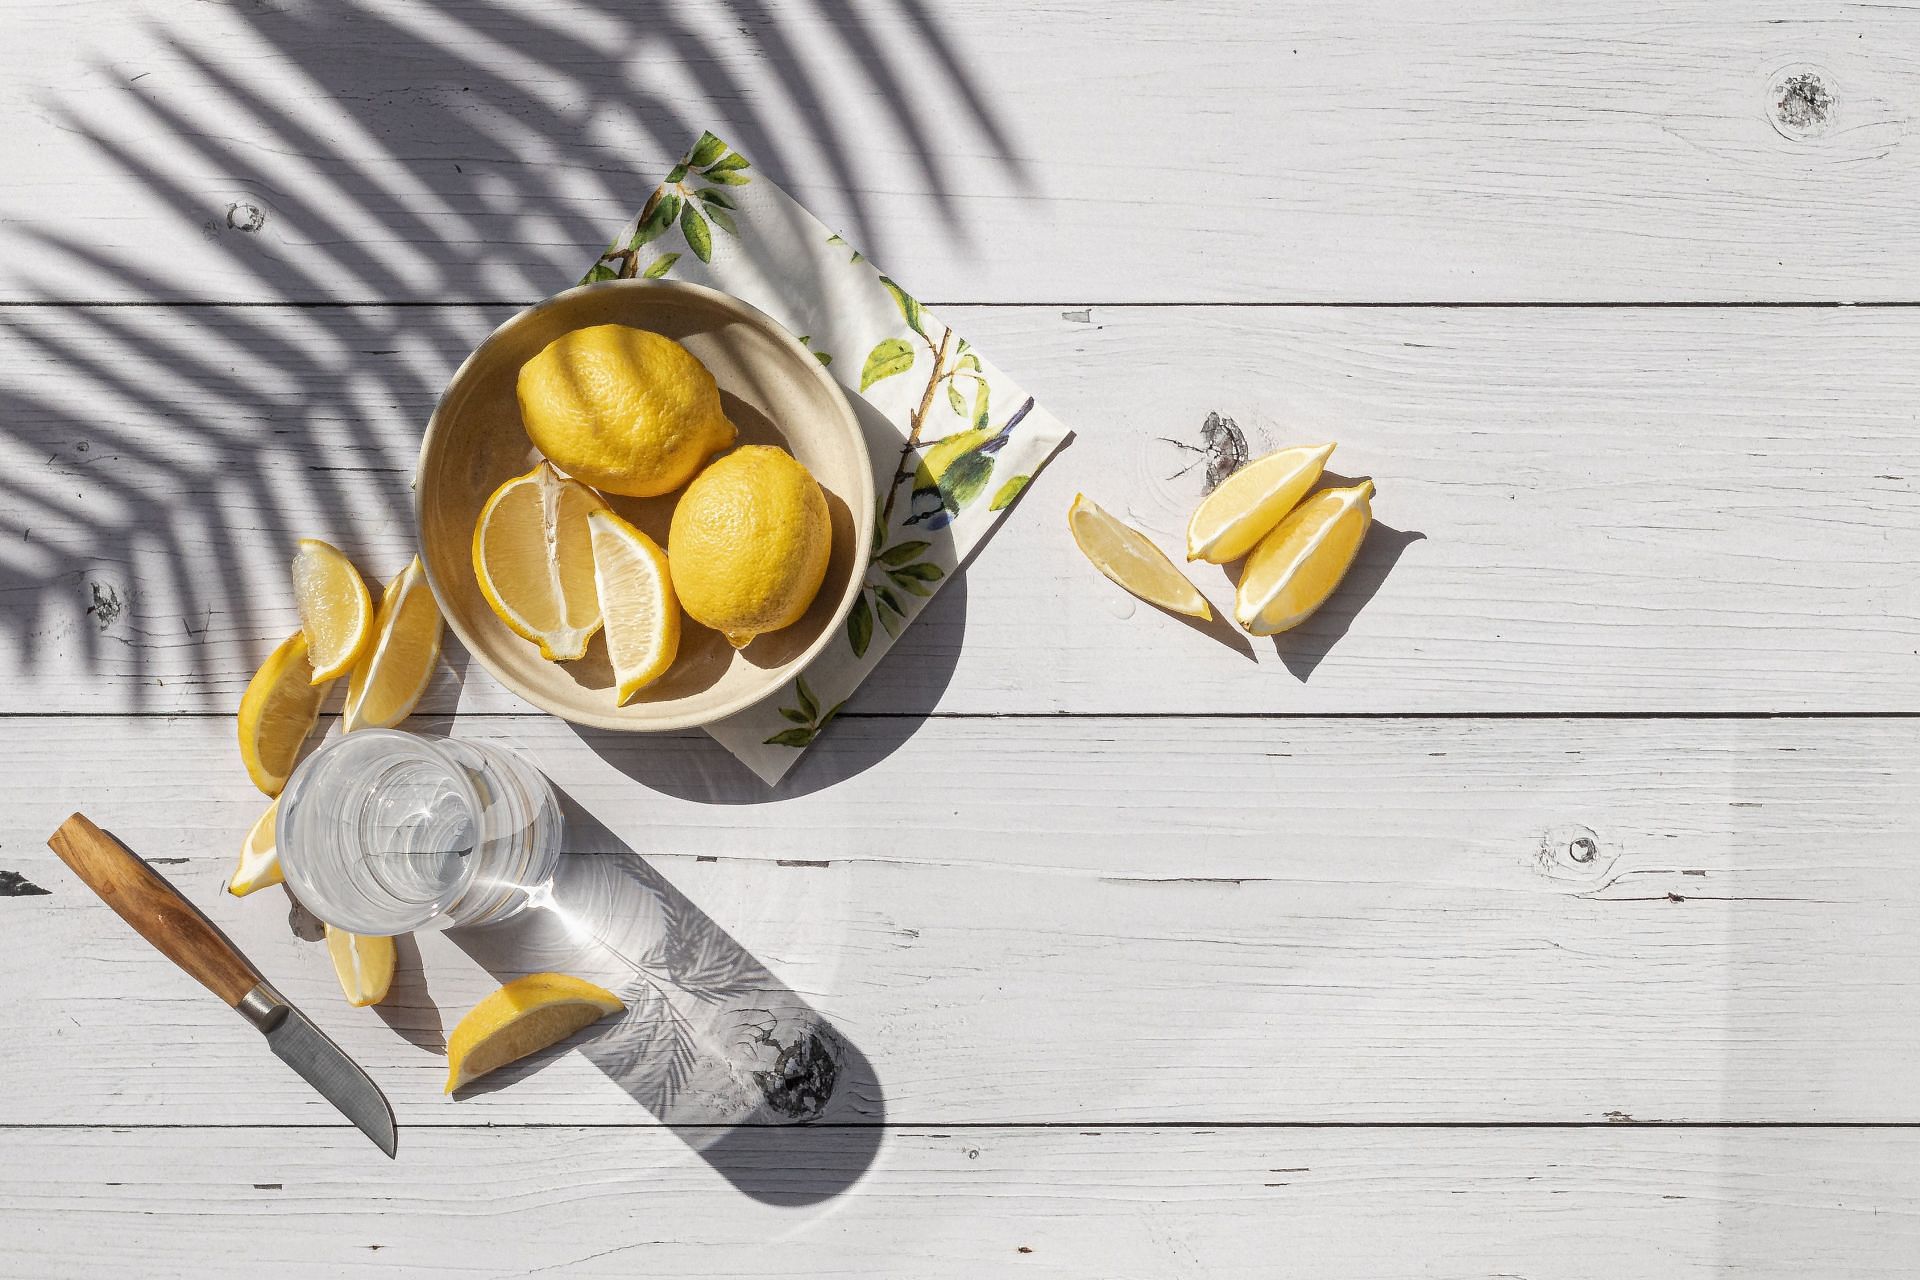 Drinking lemon water is good for health. (Image via Unsplash/ Micheile Henderson)